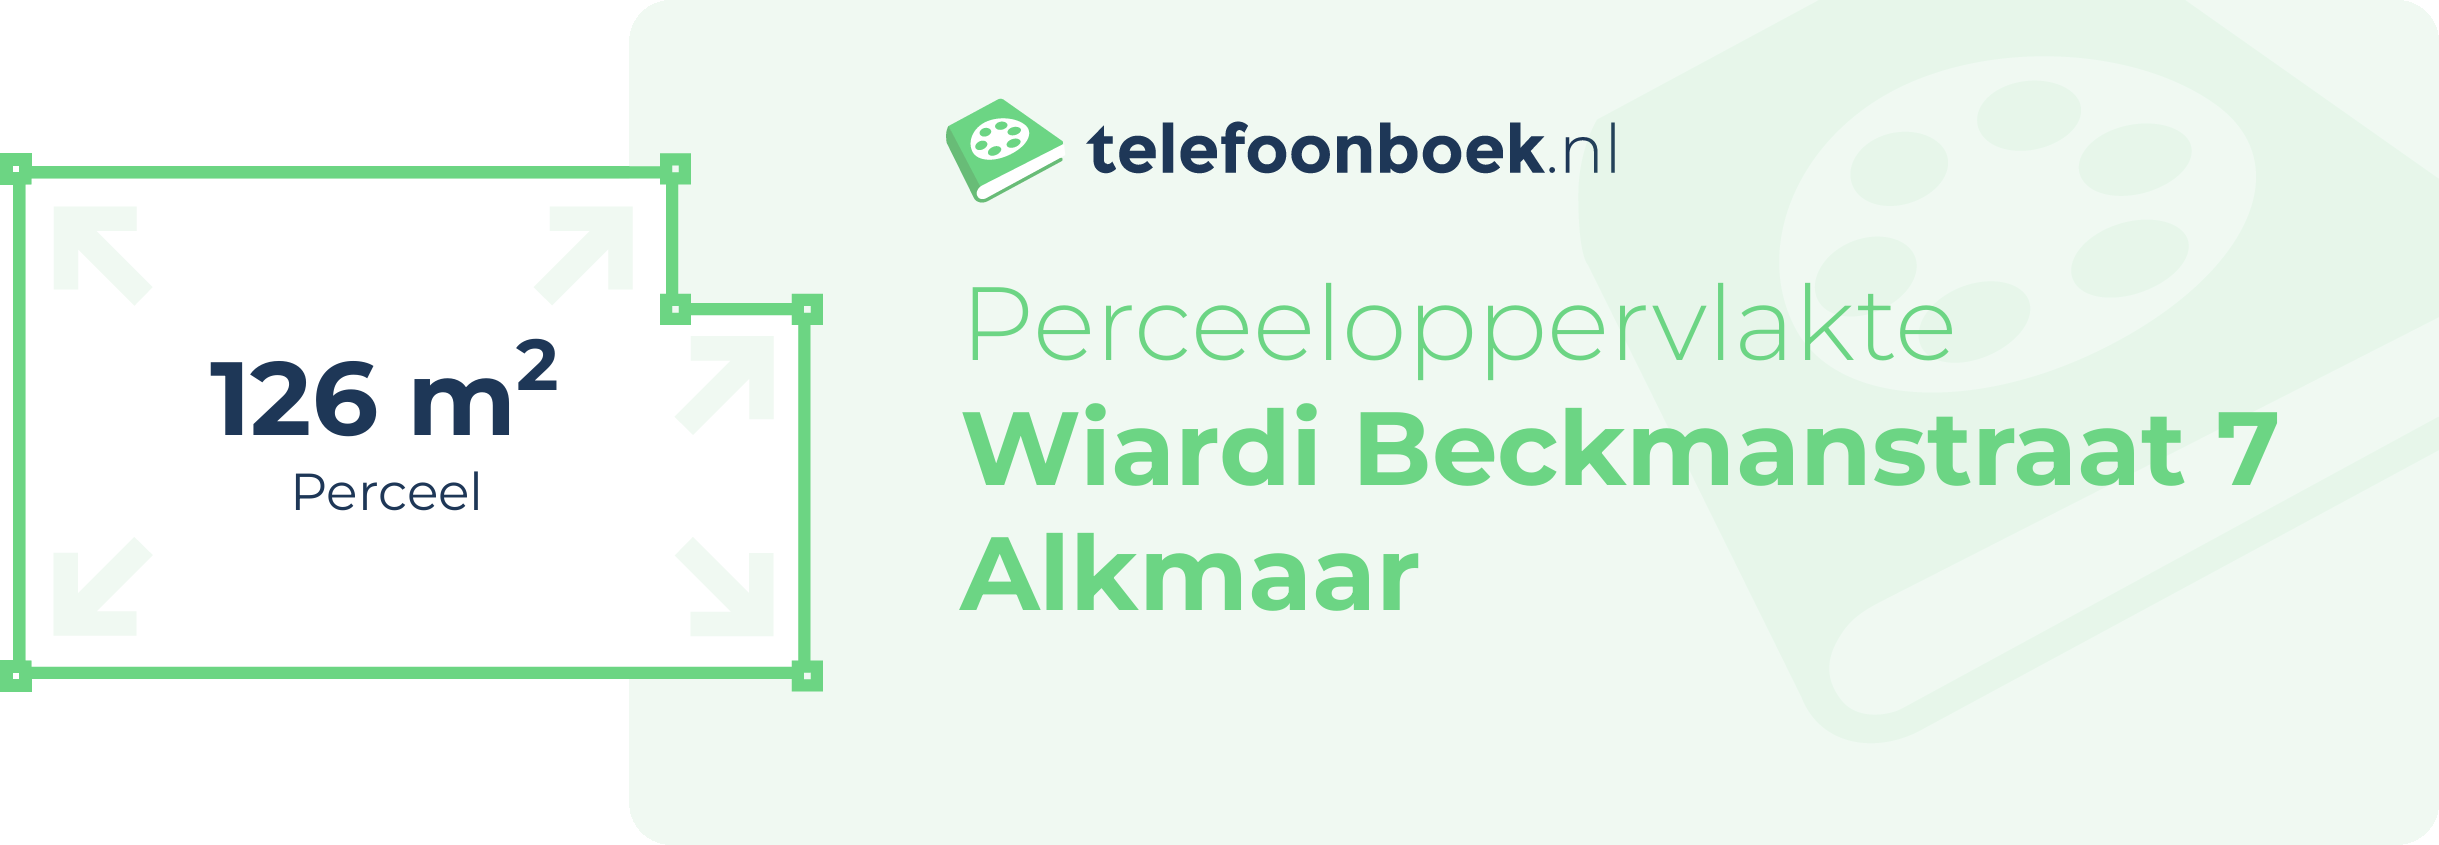 Perceeloppervlakte Wiardi Beckmanstraat 7 Alkmaar